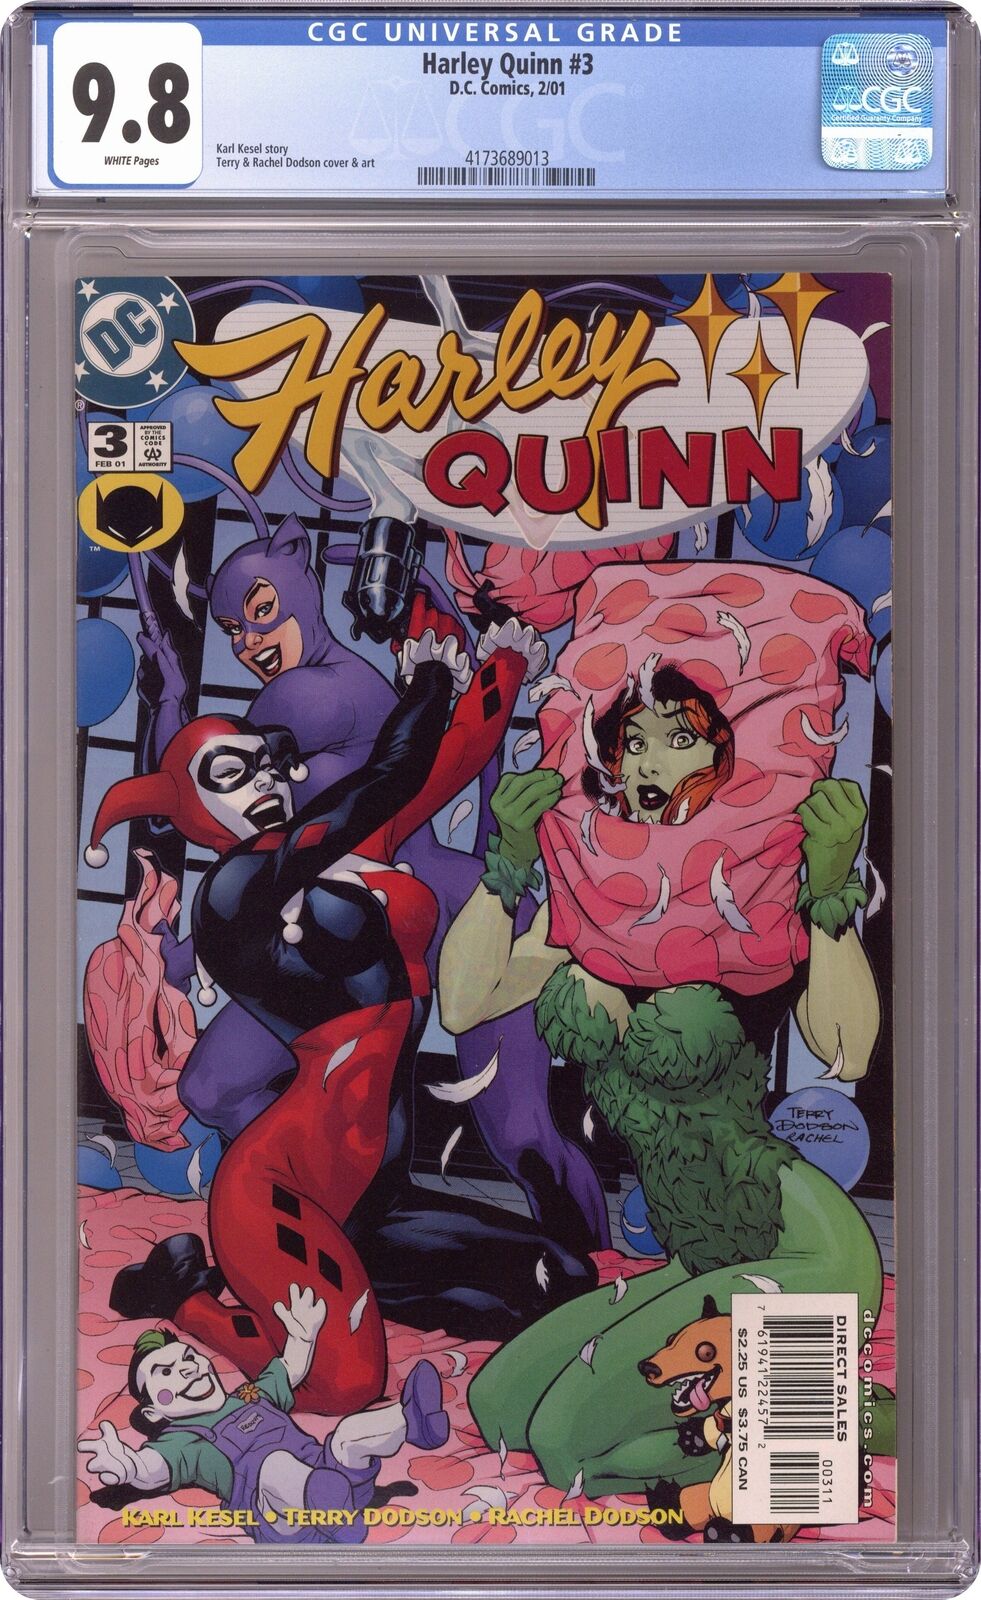 Harley Quinn #3 CGC 9.8 2001 4173689013